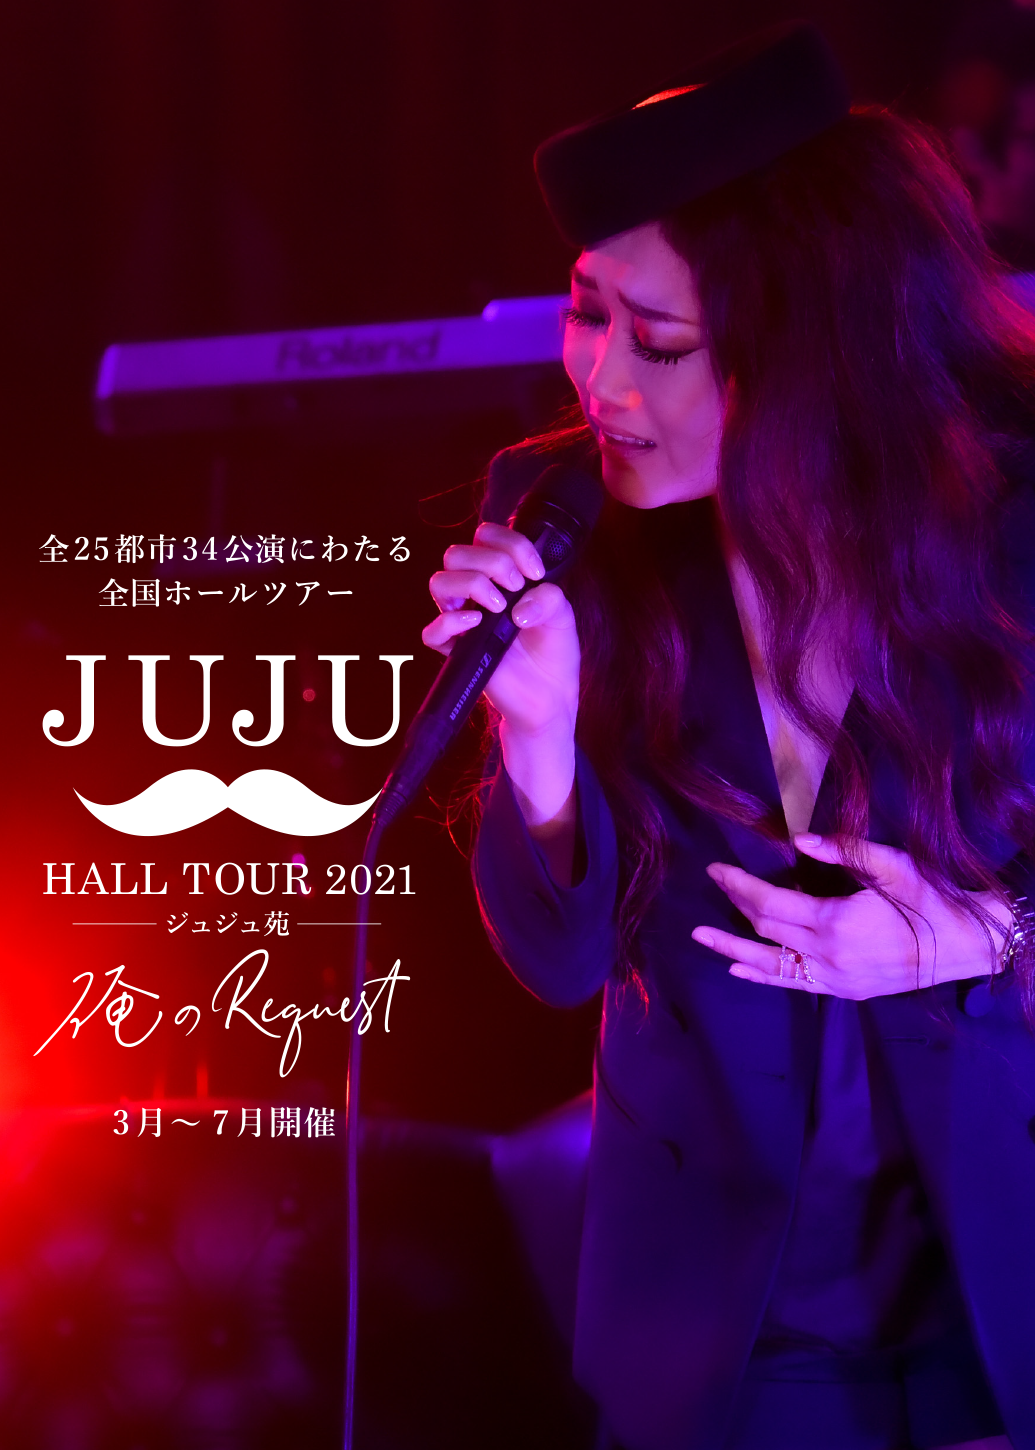 Juju Official Site